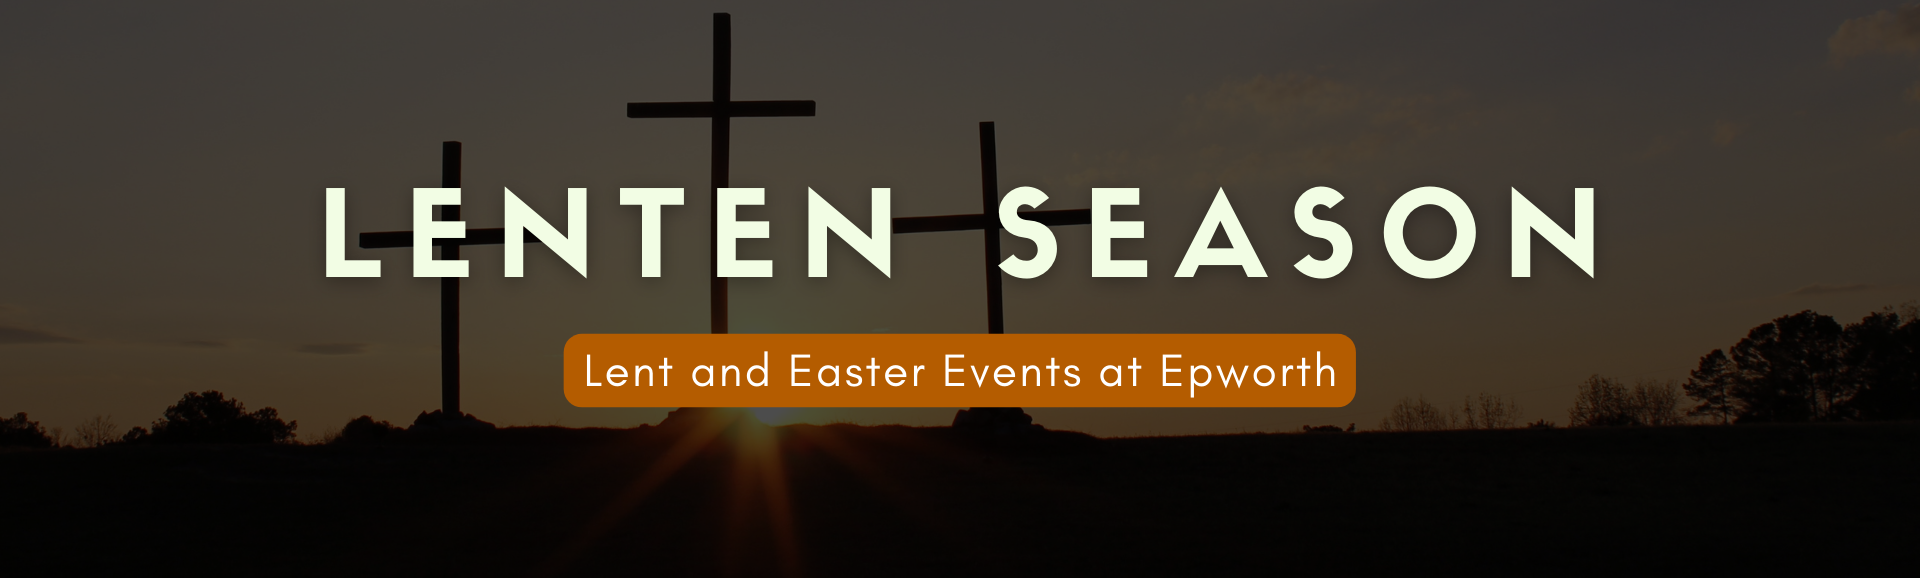 Lenten Season information at Epworth UMC Durham